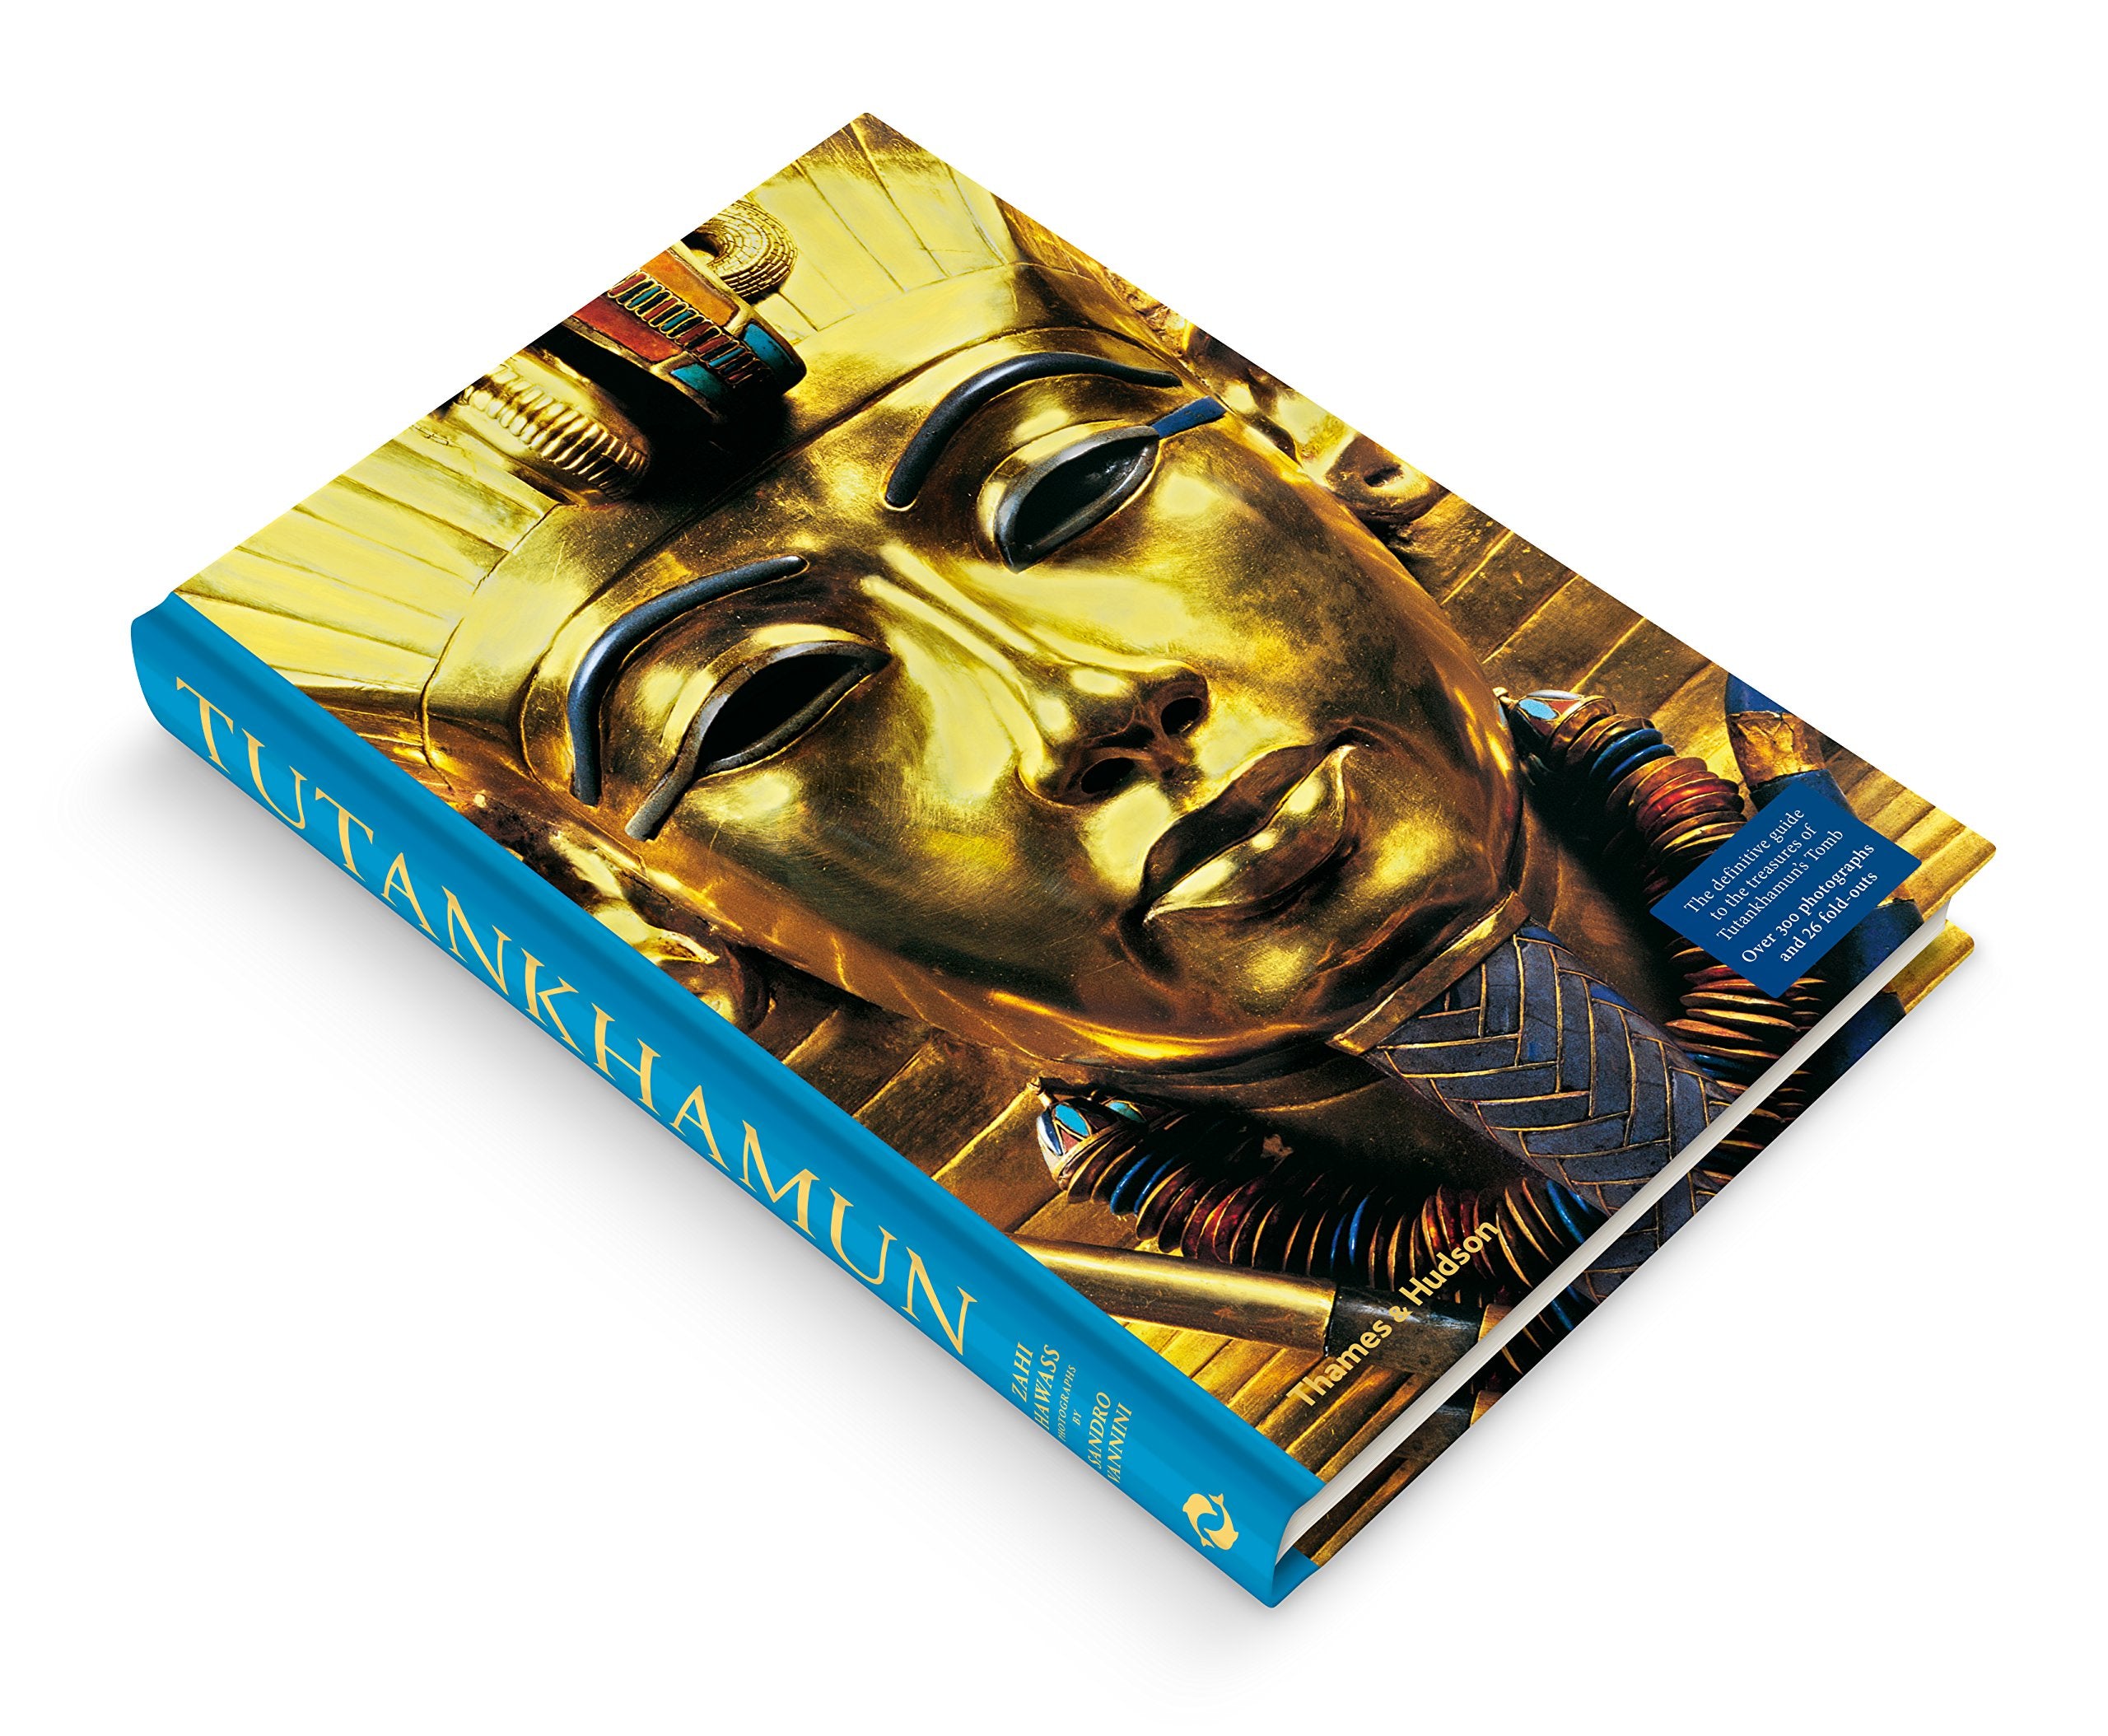 Tutankhamun: The Treasures of the Tomb